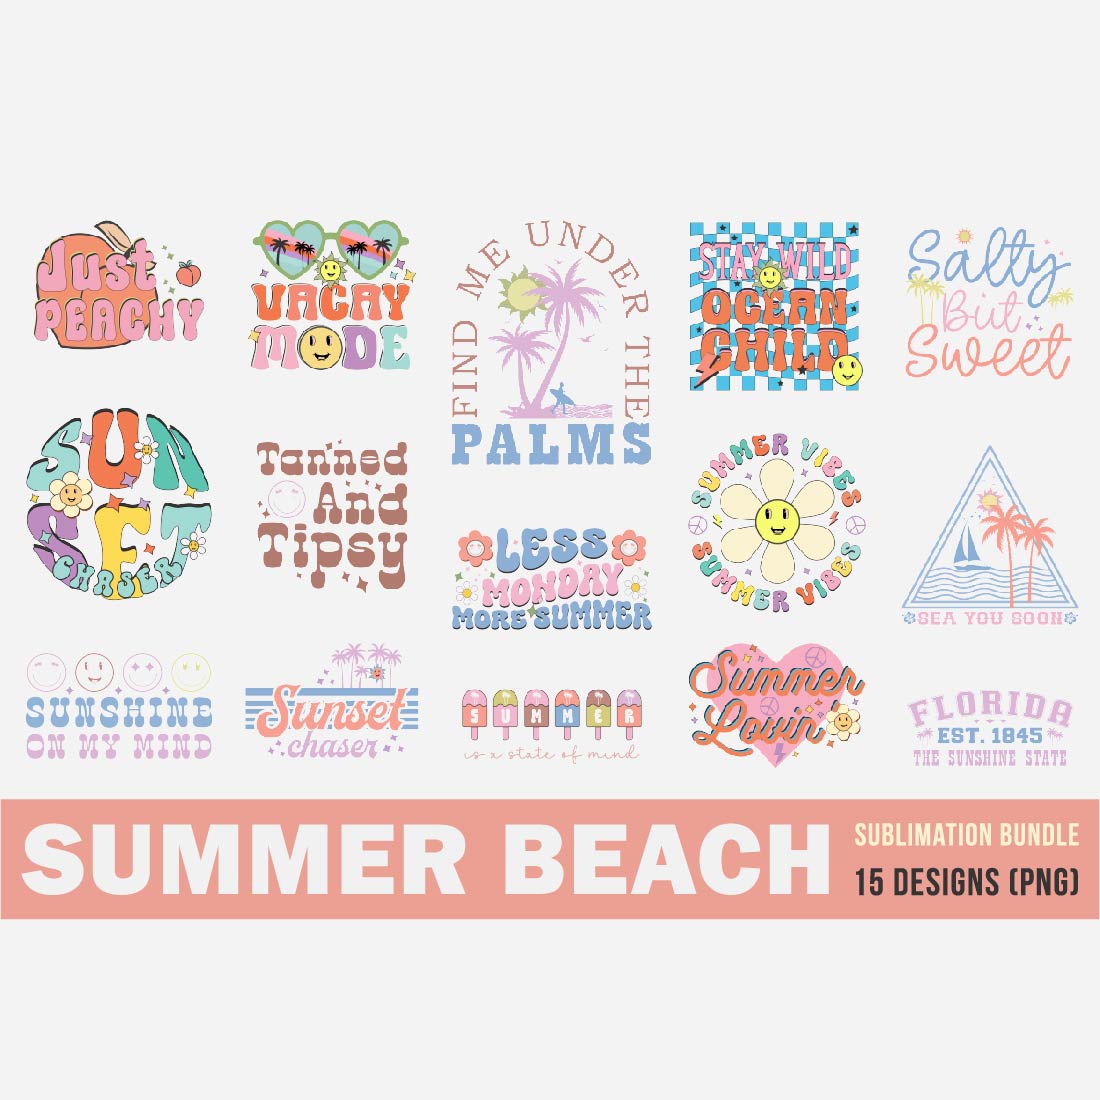 Summer Beach Sublimation Bundle preview image.